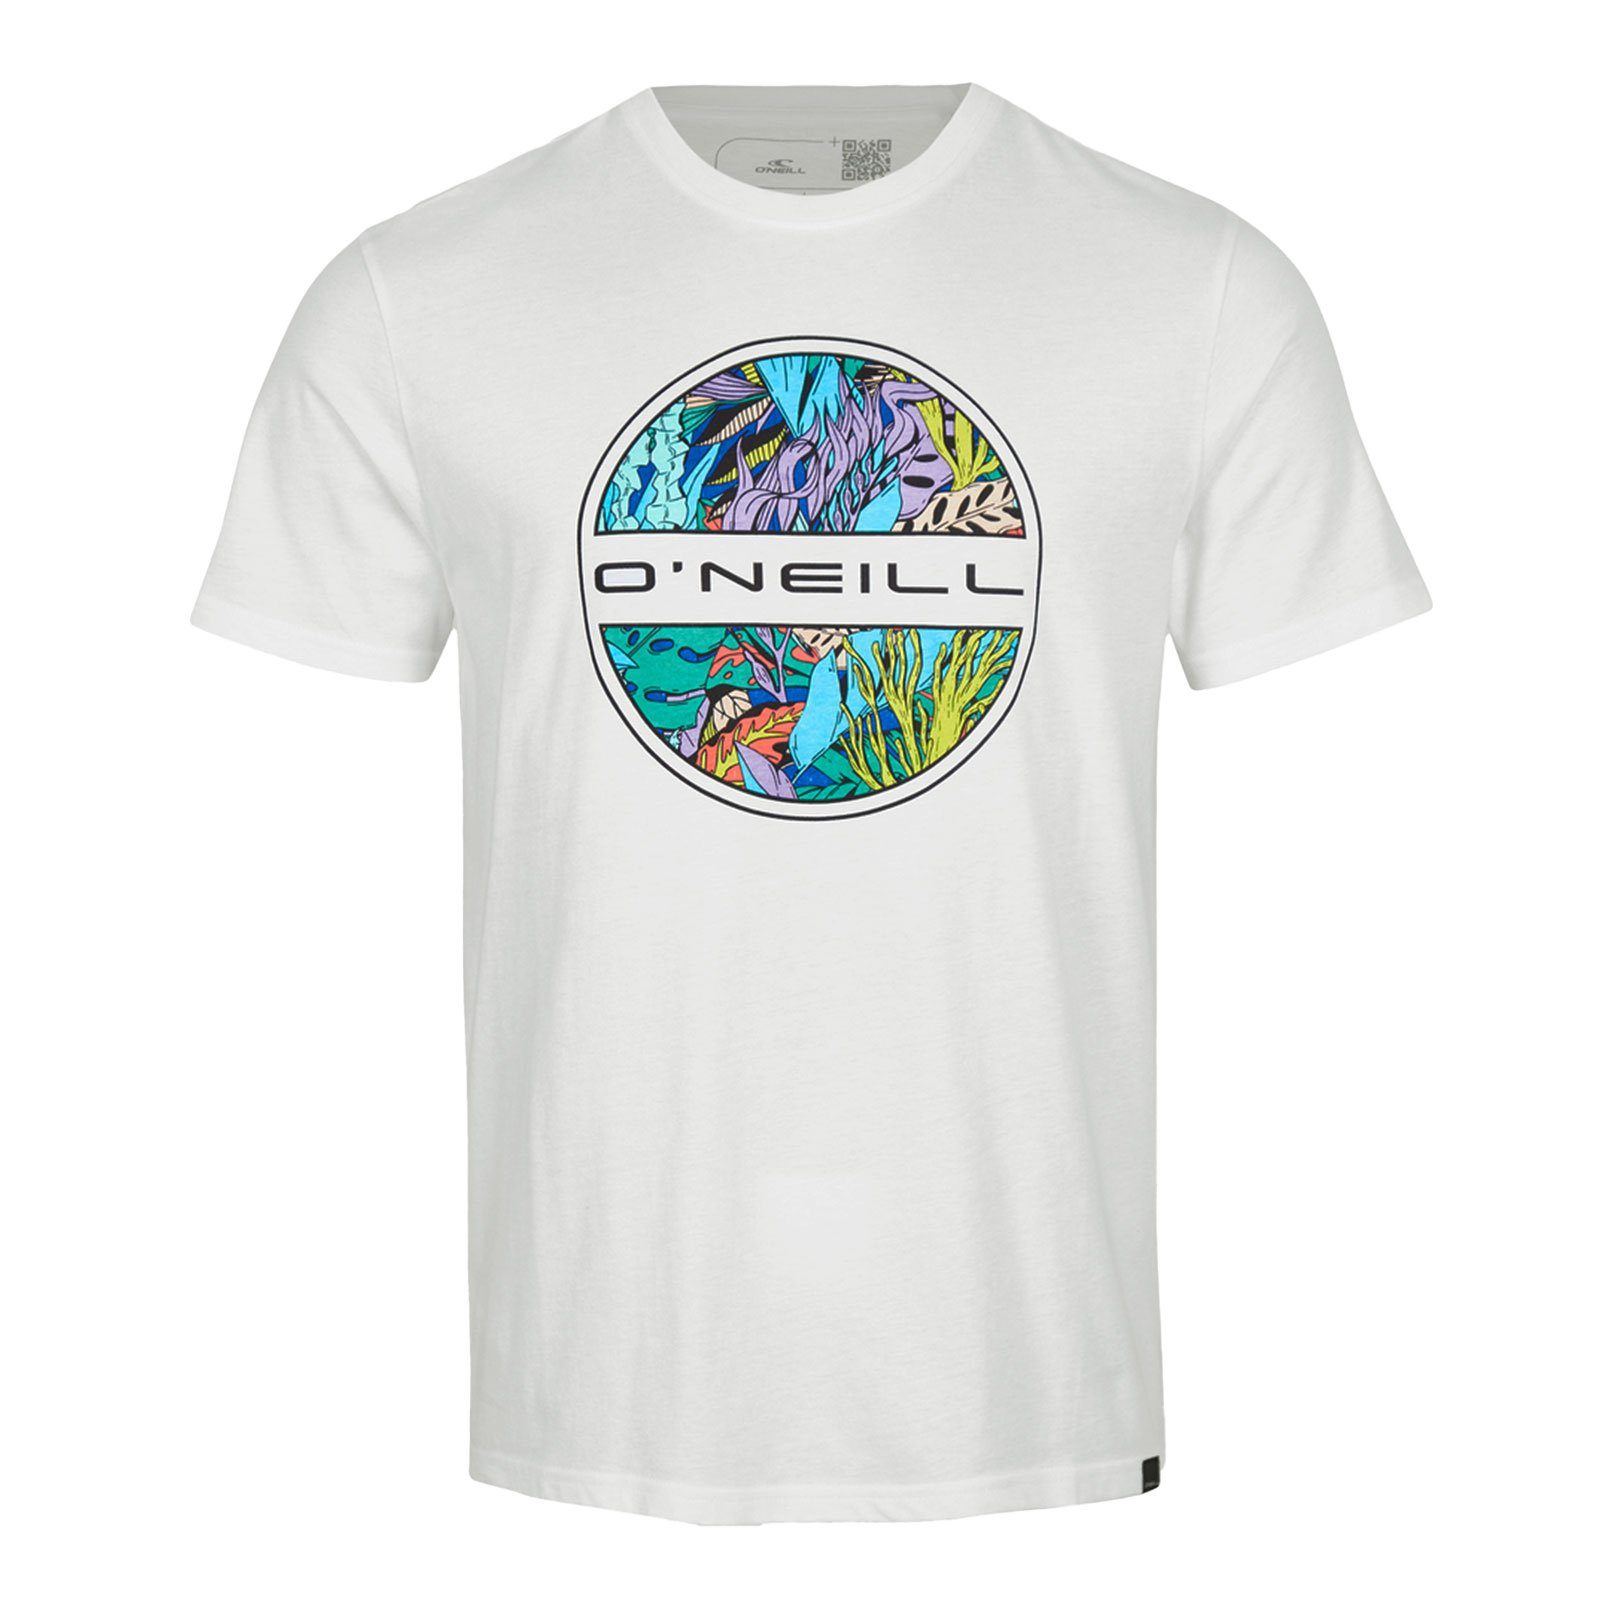 O'Neill T-Shirt Seareef mit kreisförmigem Meeresflora-Print und Logo 11010 snow white